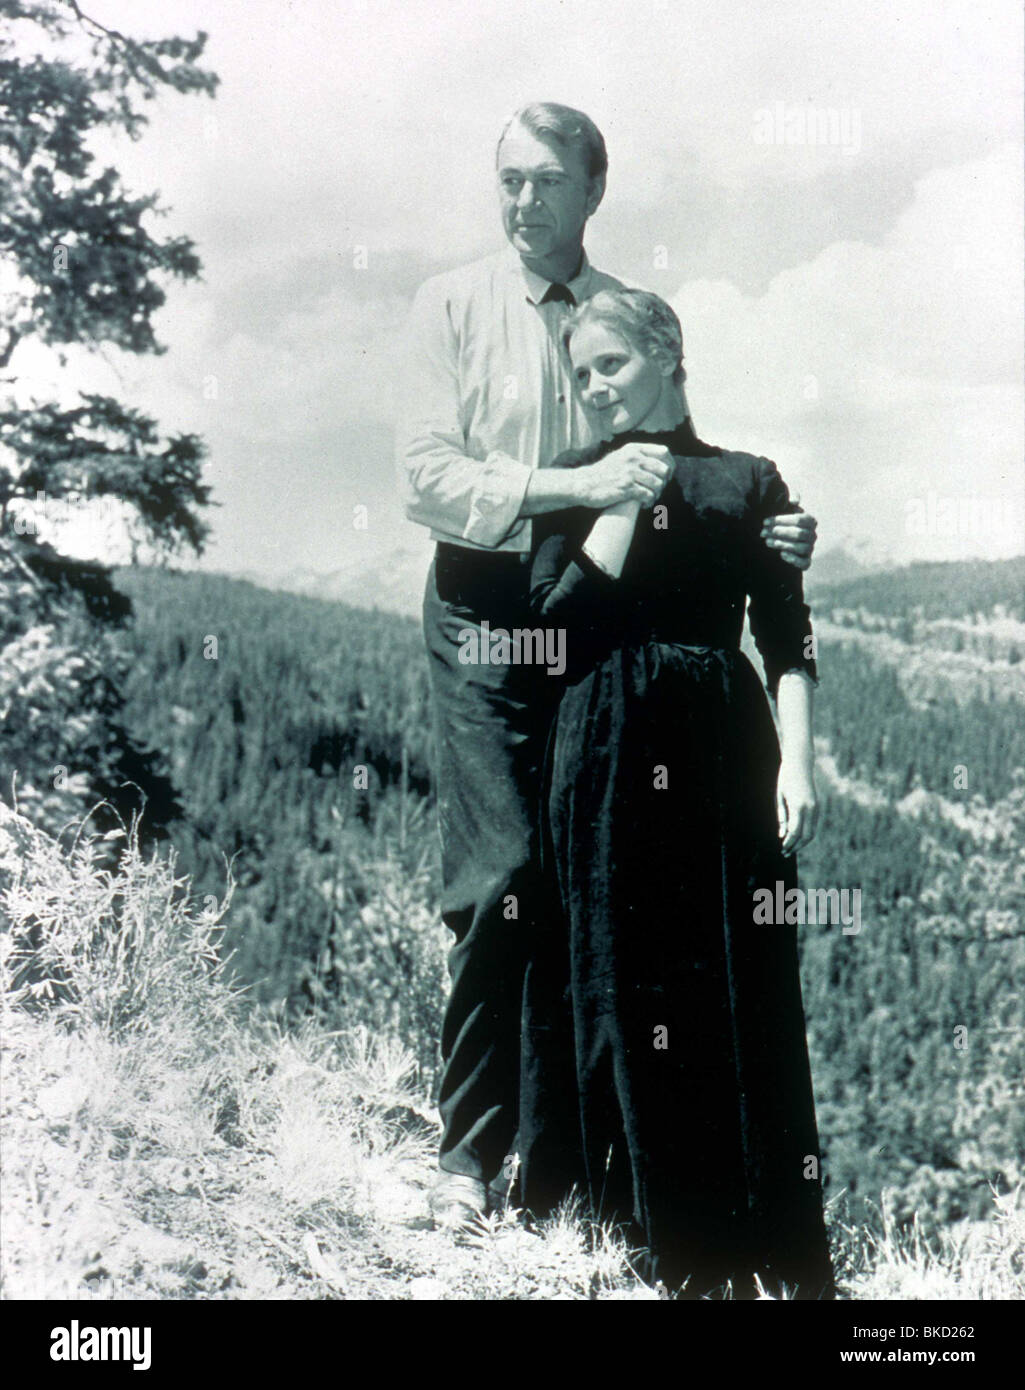 THE HANGING TREE (1959) GARY COOPER, MARIA SCHELL HGTR 002 Stock Photo